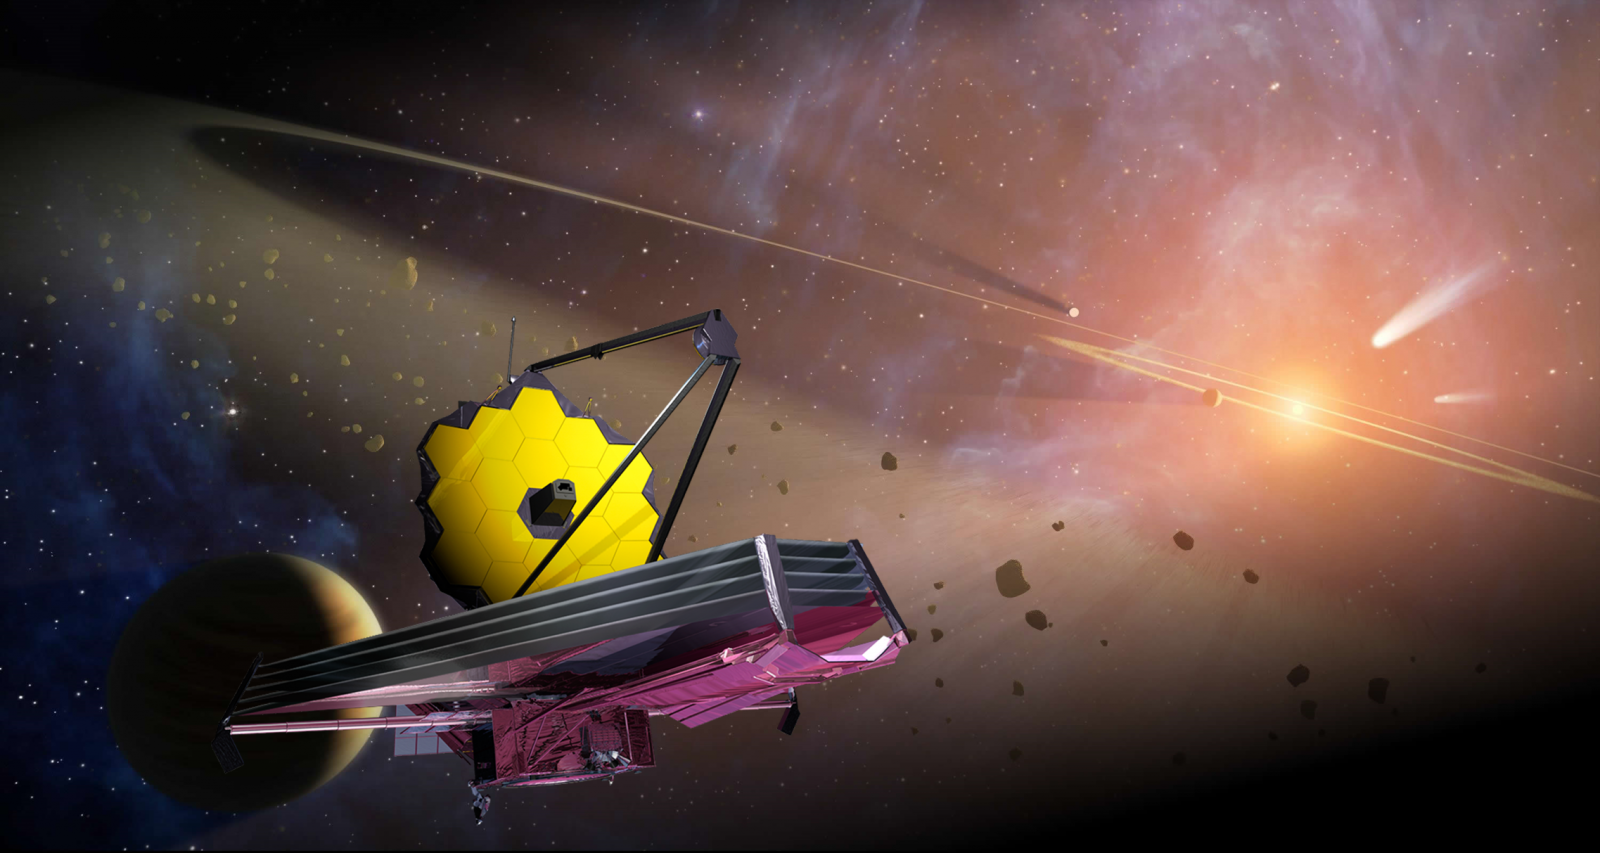 James Webb Space Telescope NASA image